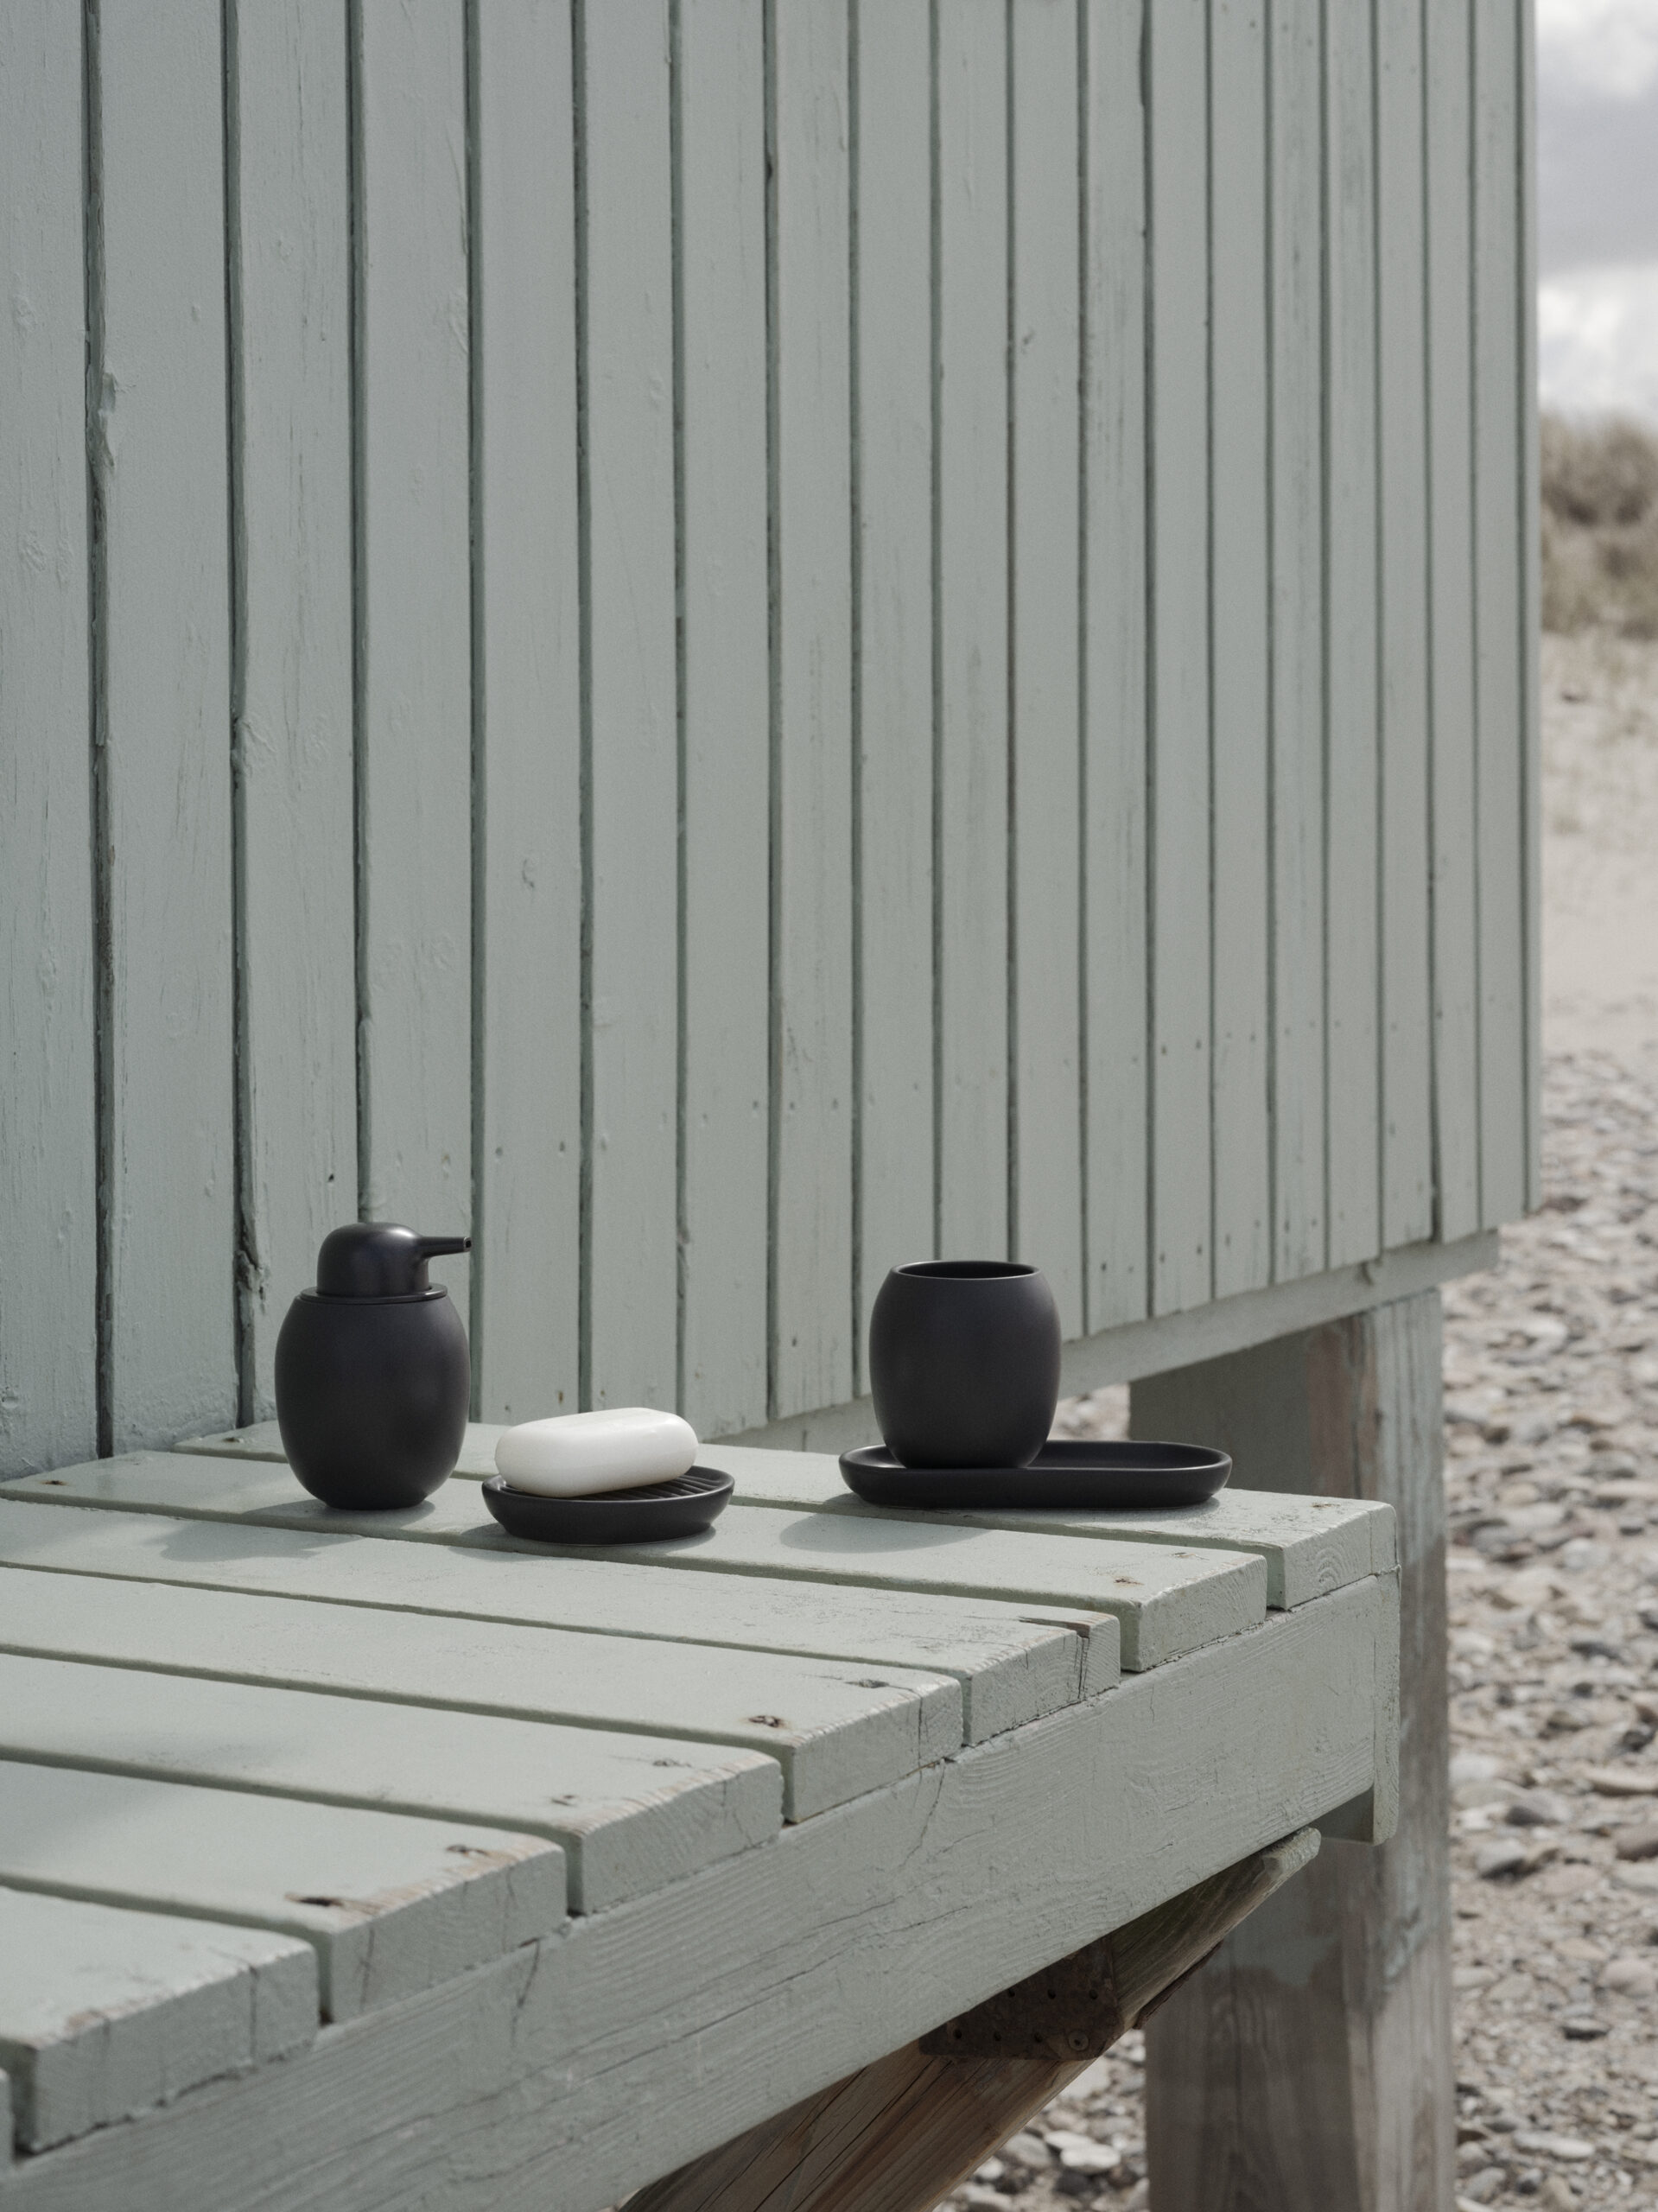 Fjord bathroom and kitchen accessories designed by Debiasi Sandri for Stelton